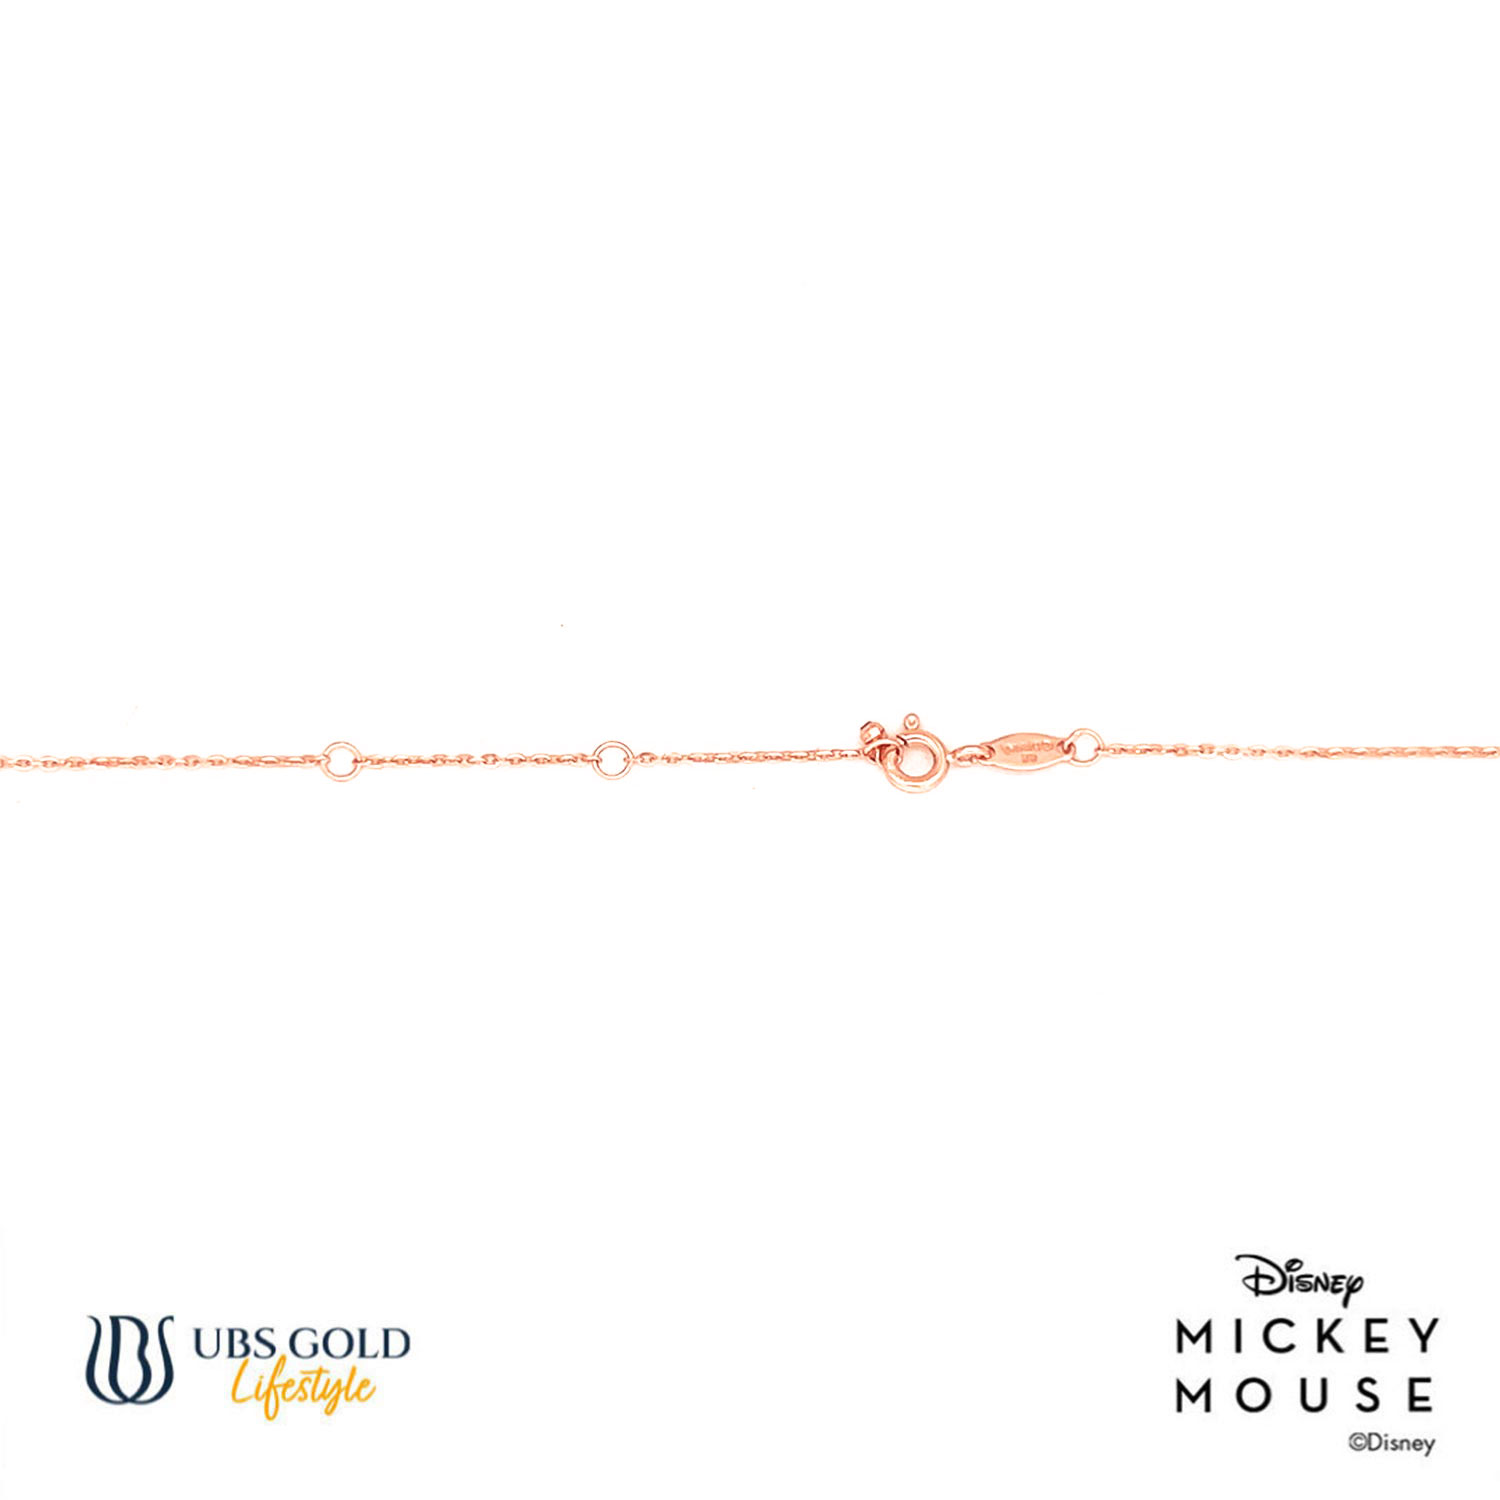 UBS Gold Kalung Emas Disney Mickey Mouse - Kky0475 - 17K